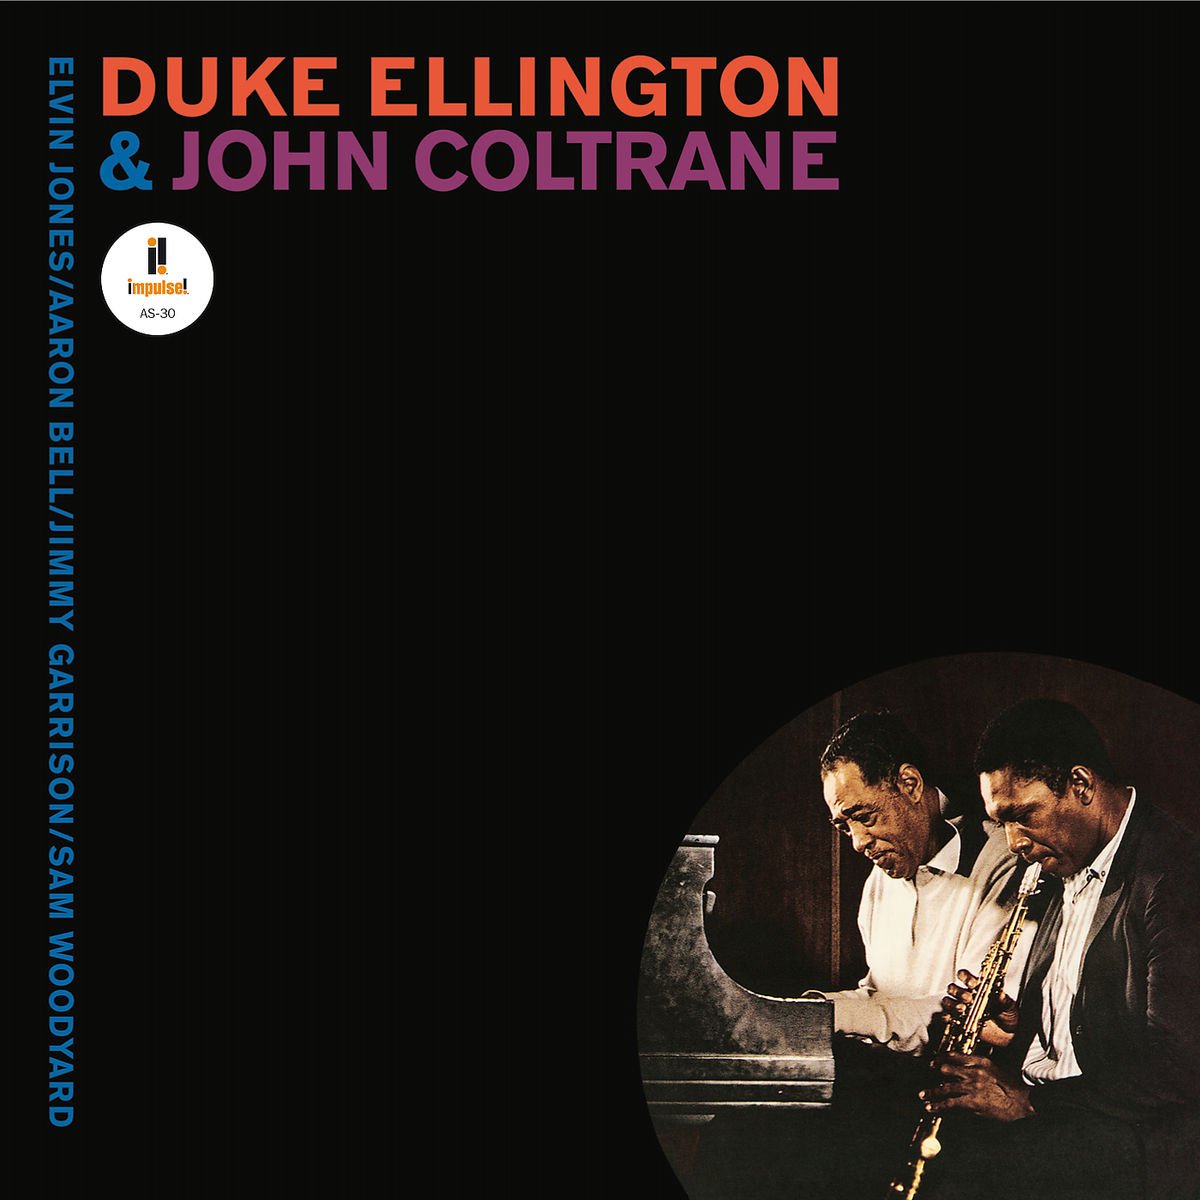 Duke Ellington & John Coltrane "Duke Ellington & John Coltrane"[All Analog] [Impulse Acoustic Sounds Series]